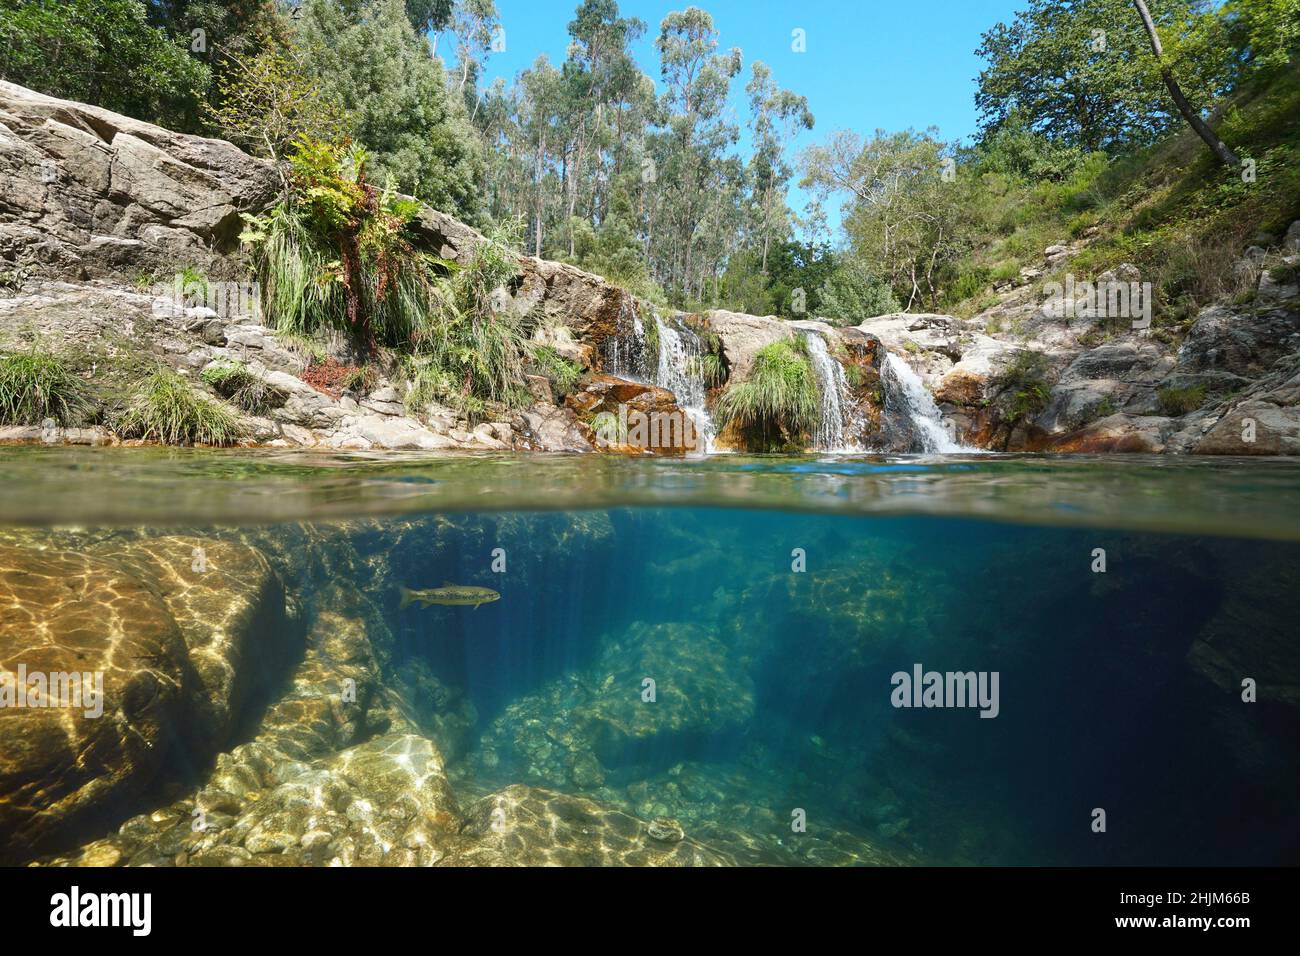 Arroyo salvaje con pequeña cascada y agua clara, vista de dos niveles sobre y bajo el agua, paisaje fluvial, España, Galicia, Pozas de Bugalleira Foto de stock